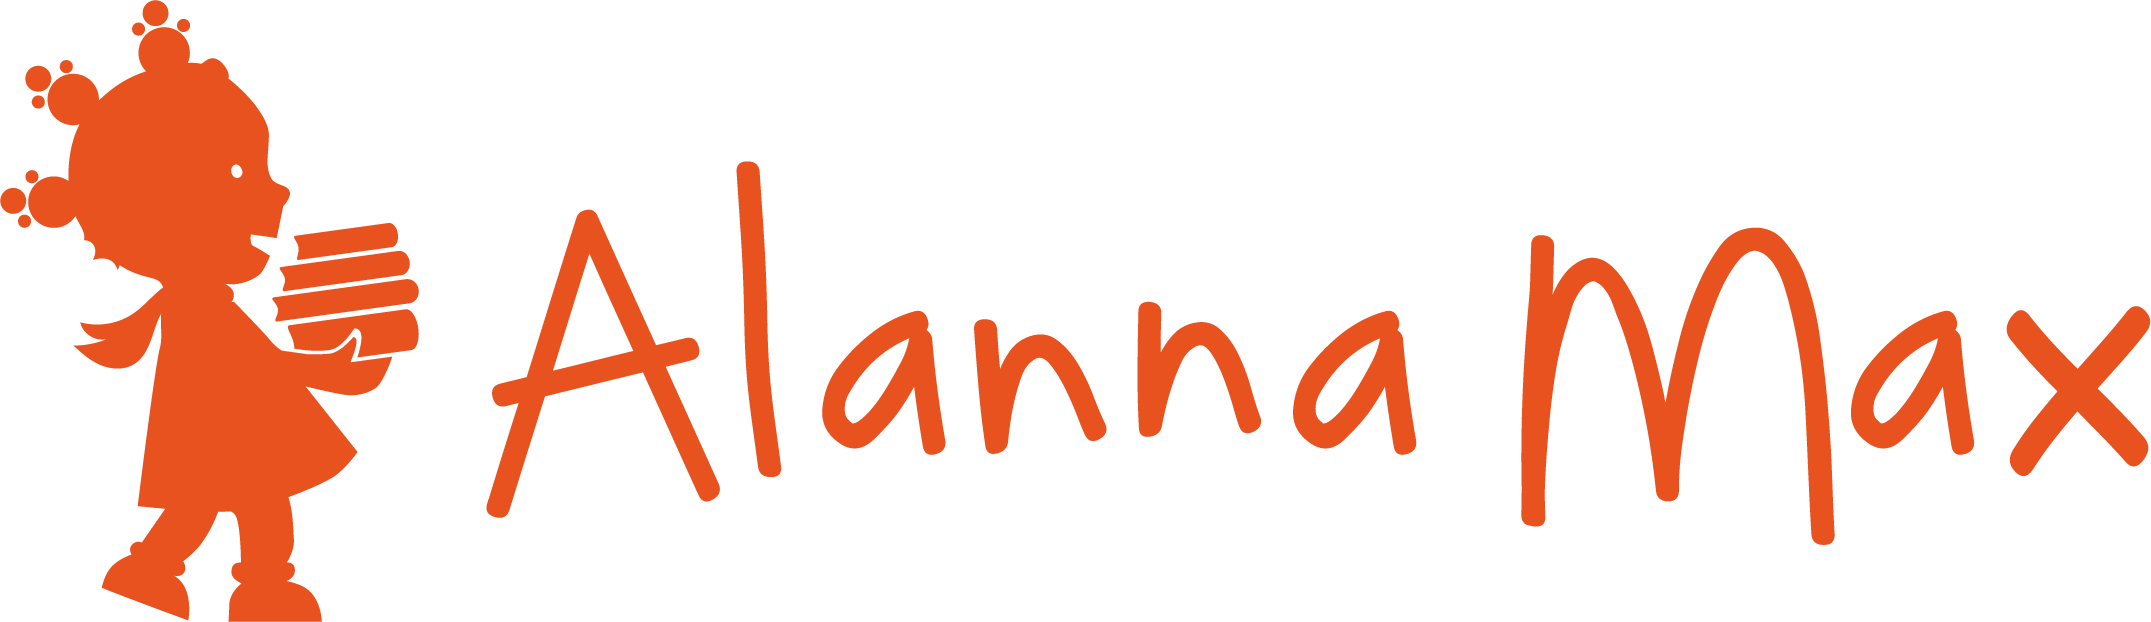 Alanna Max logo